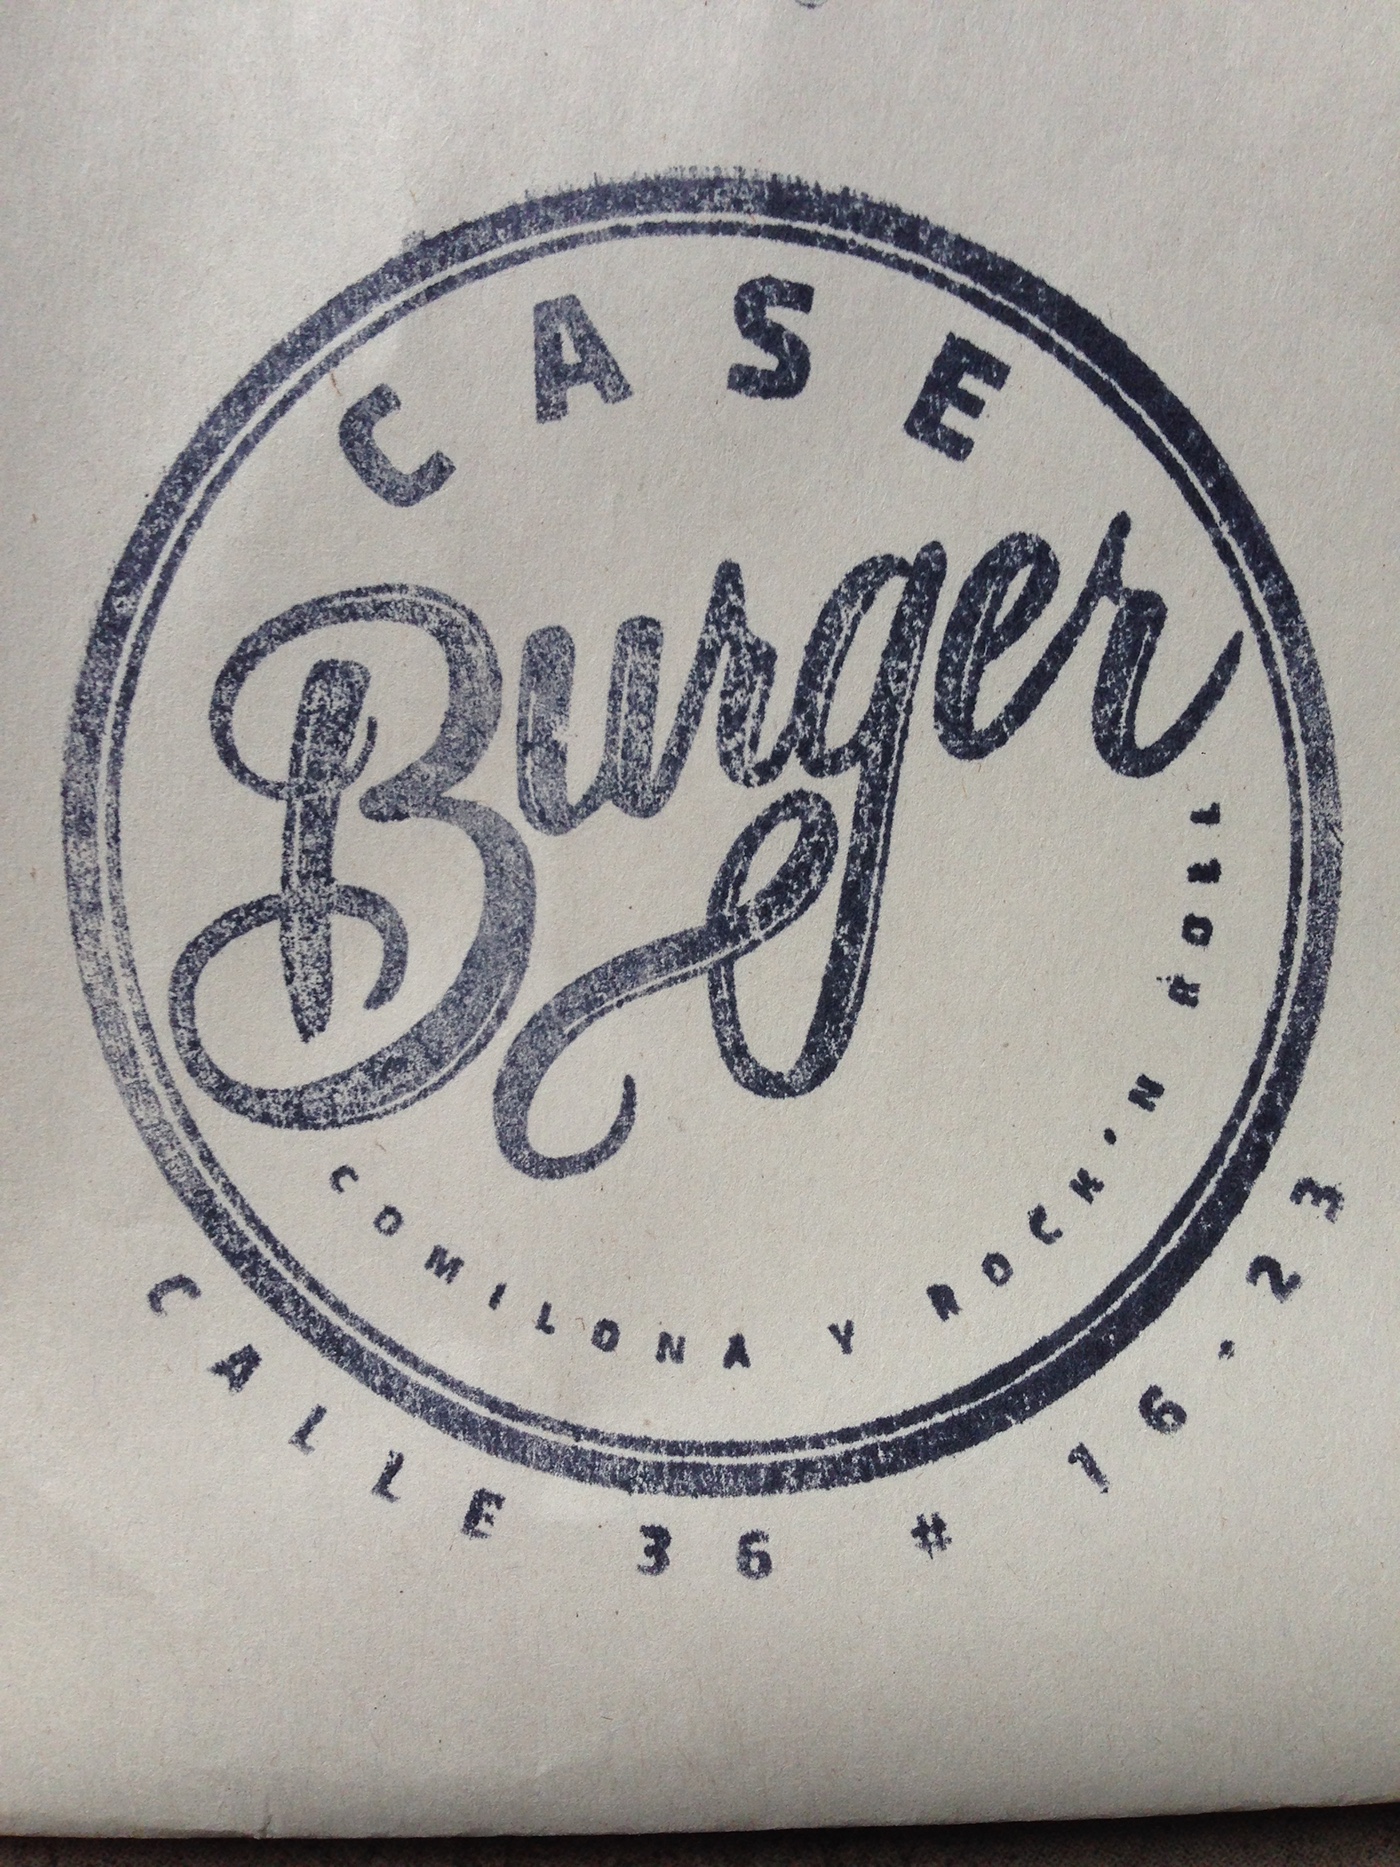 lettering burger case type design brush pen hand made Calligraphy   45 rpm 78 rpm vinyl record